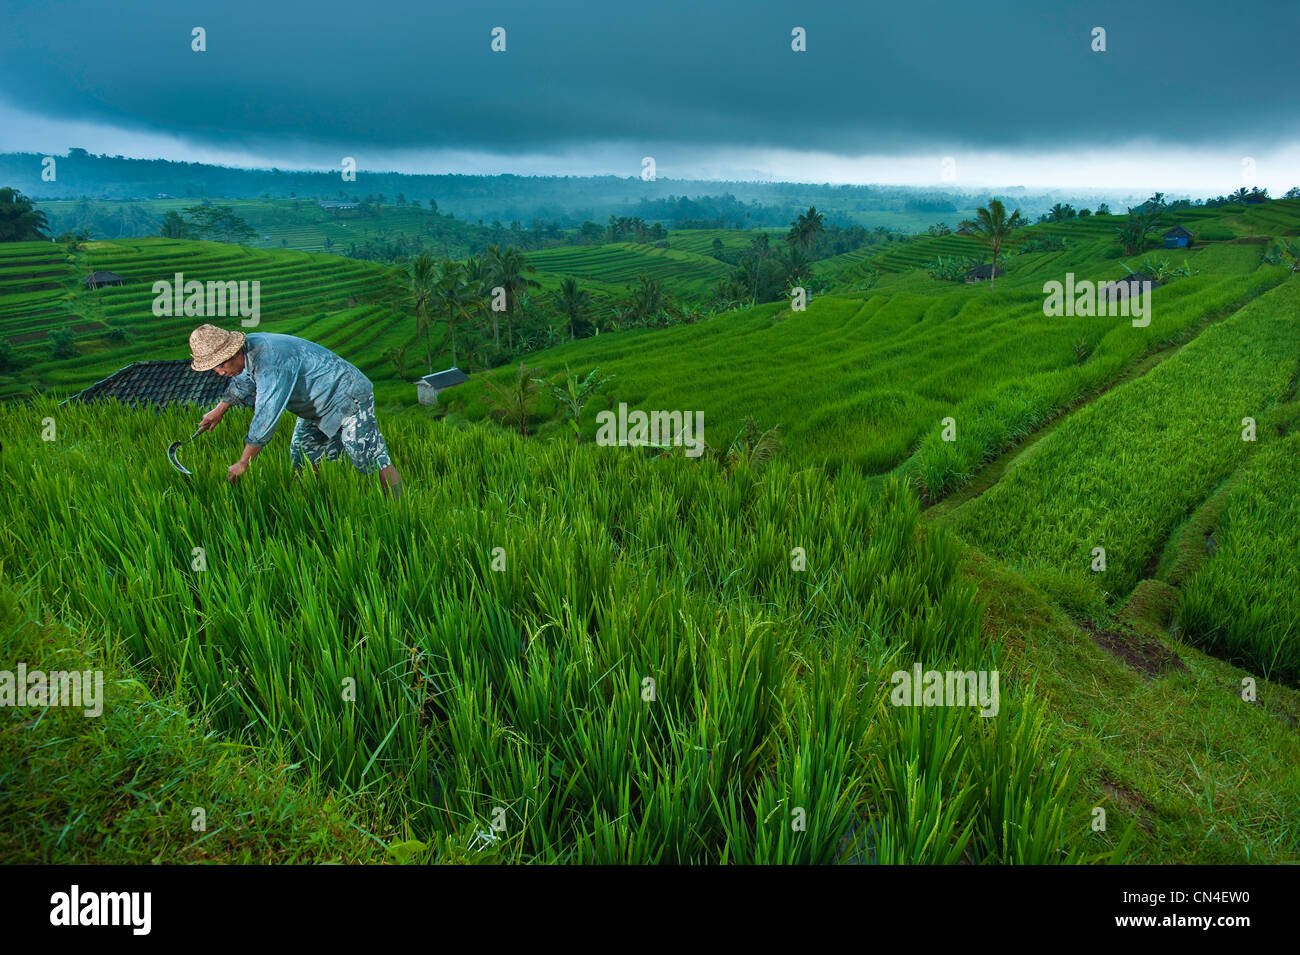 Indonesia, Bali Island, Jatiluwih village, Nyoman Suwi works in his ricefields Stock Photo